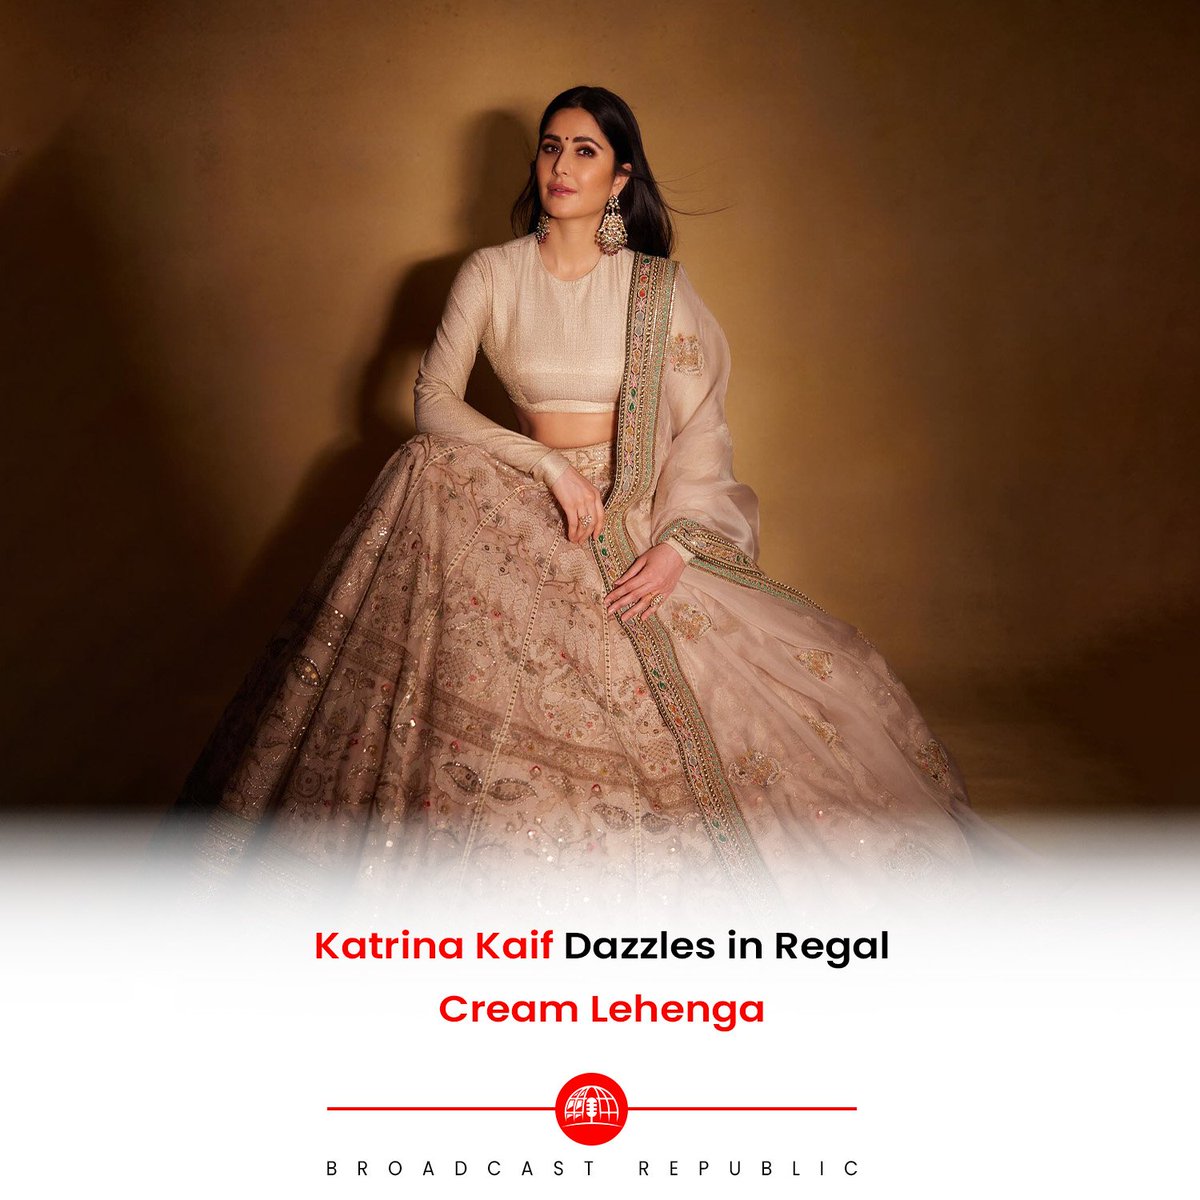 Bollywood sensation Katrina Kaif stole the spotlight at the star-studded wedding reception of Aamir Khan's daughter, Ira Khan, and Nupur Shikhare. 

#BroadcastRepublic #KatrinaKaif #BollywoodFashion #CelebrityStyle #RegalLehenga #WeddingSeason #Fashion